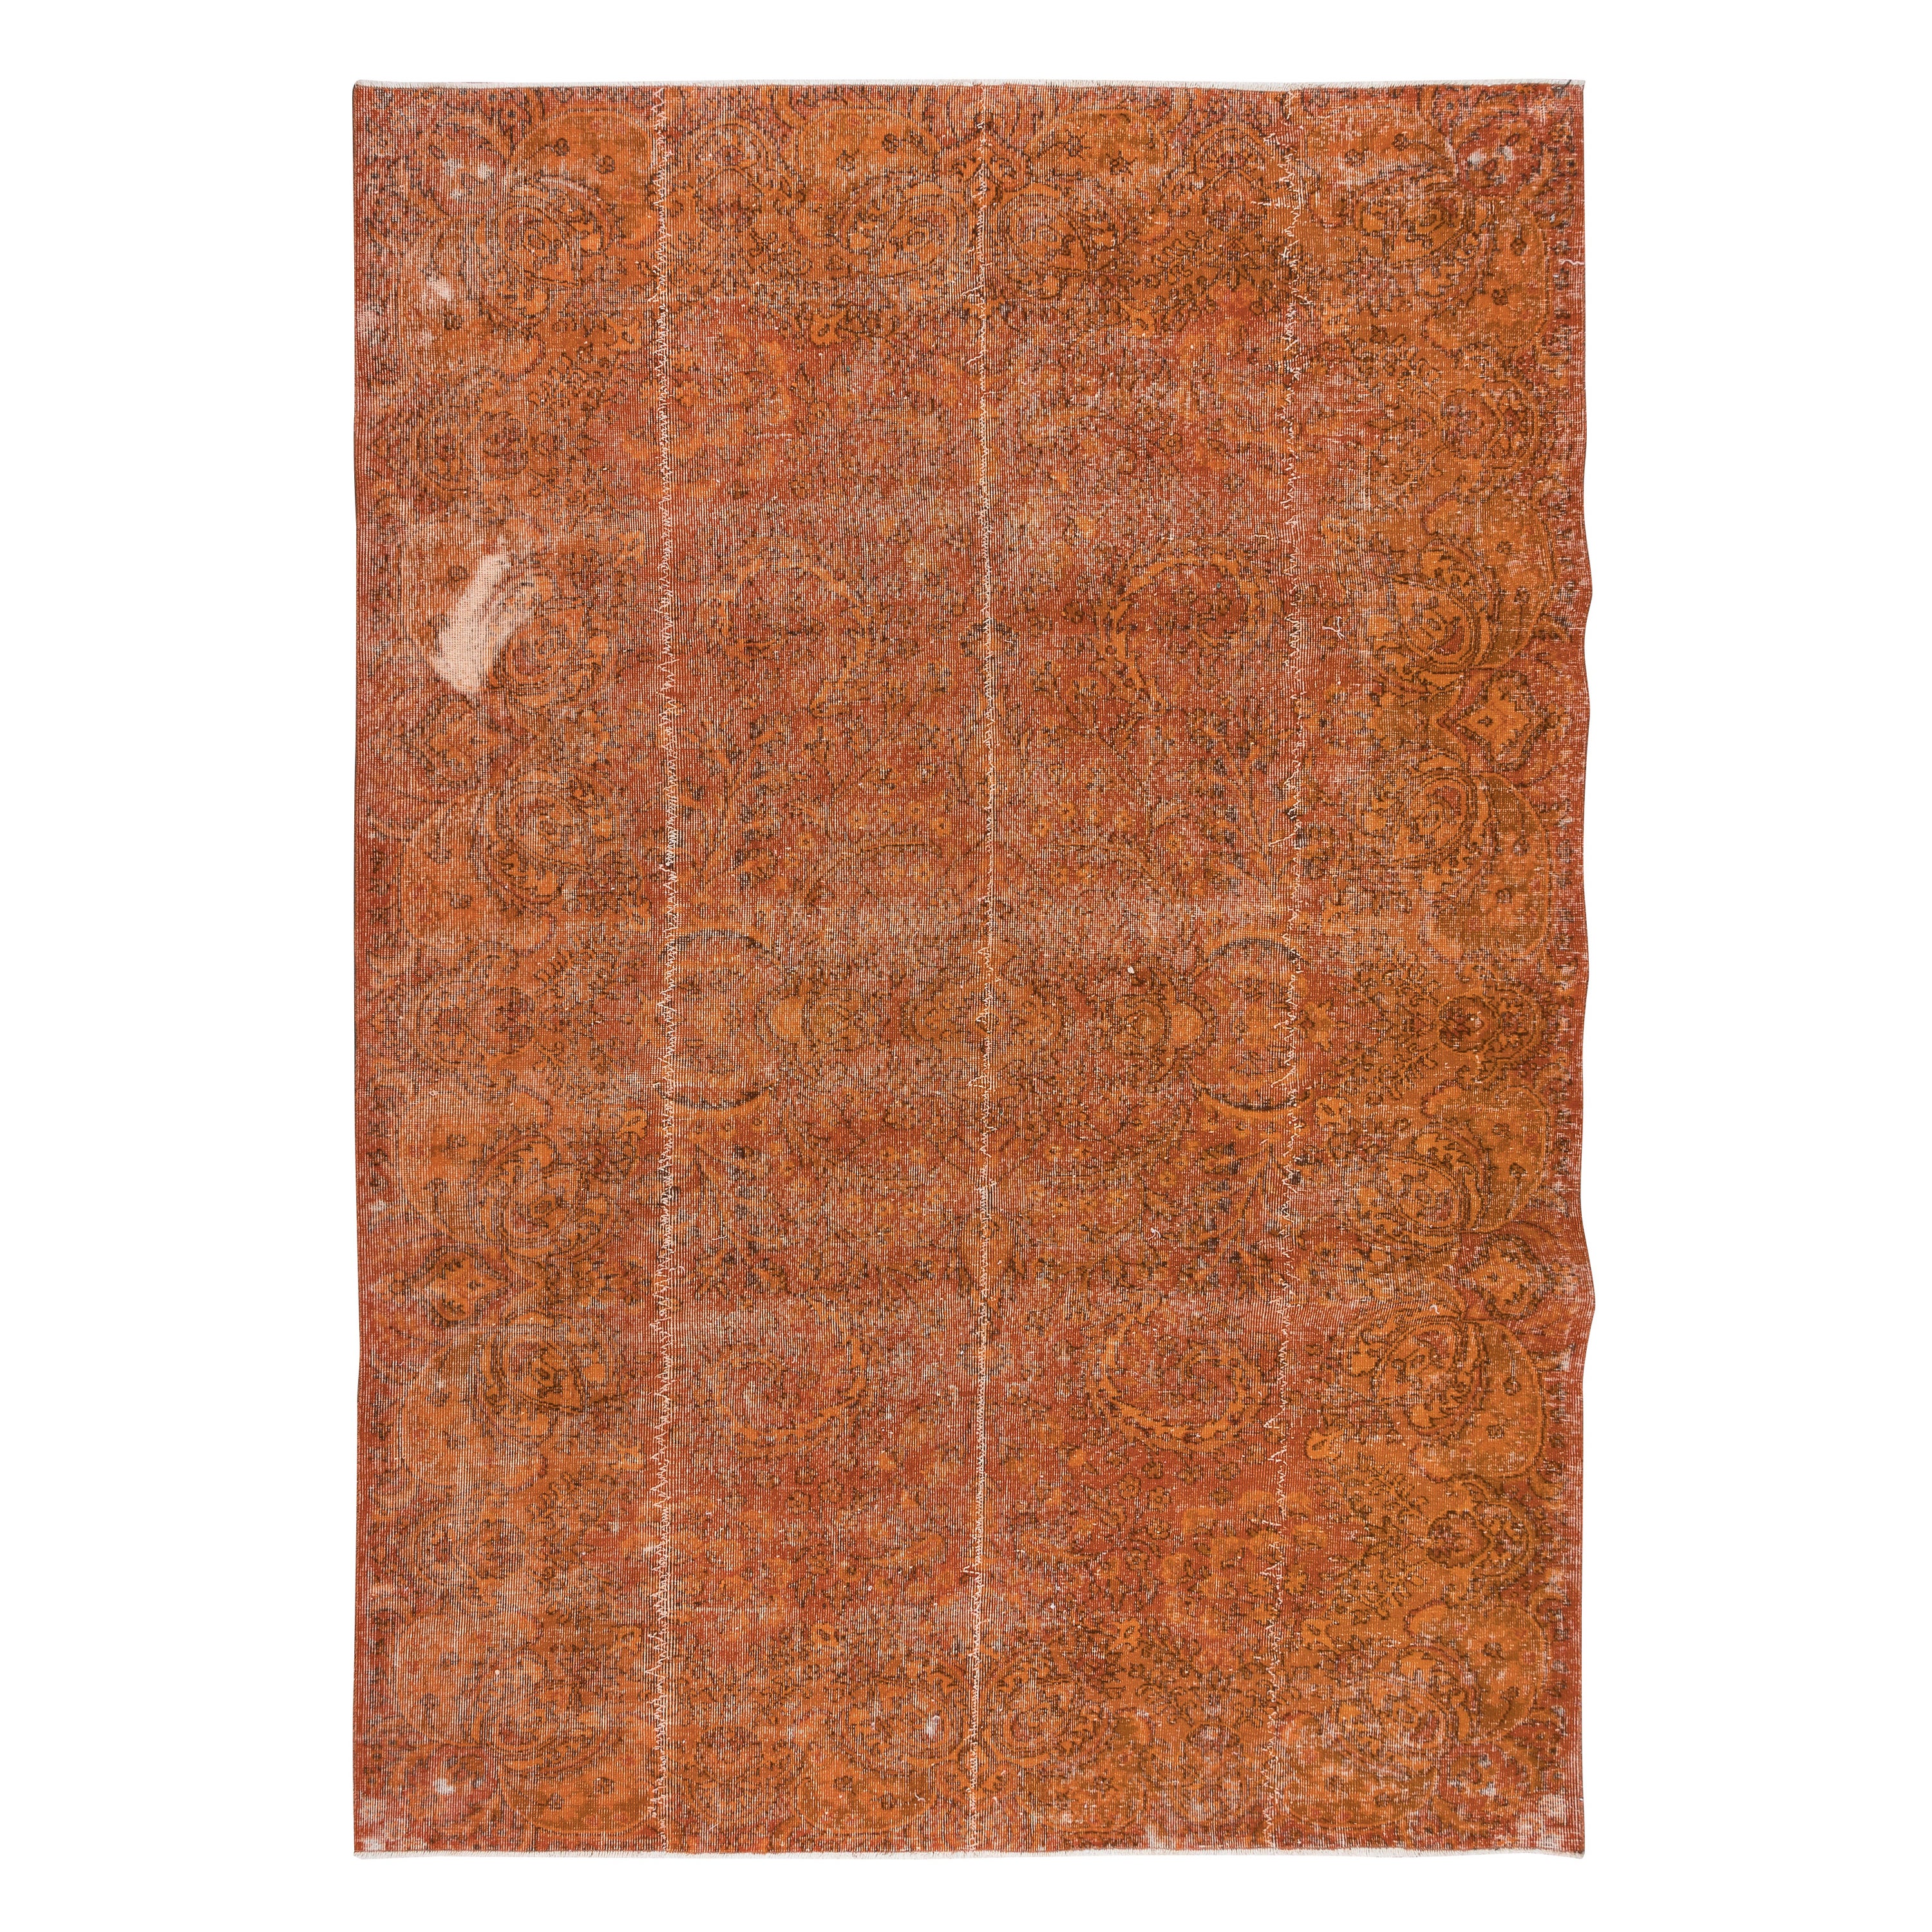 7x10 Ft Orange Handmade Area Rug, Modernity Central Anatolian Wool Carpet (tapis de laine d'Anatolie centrale)